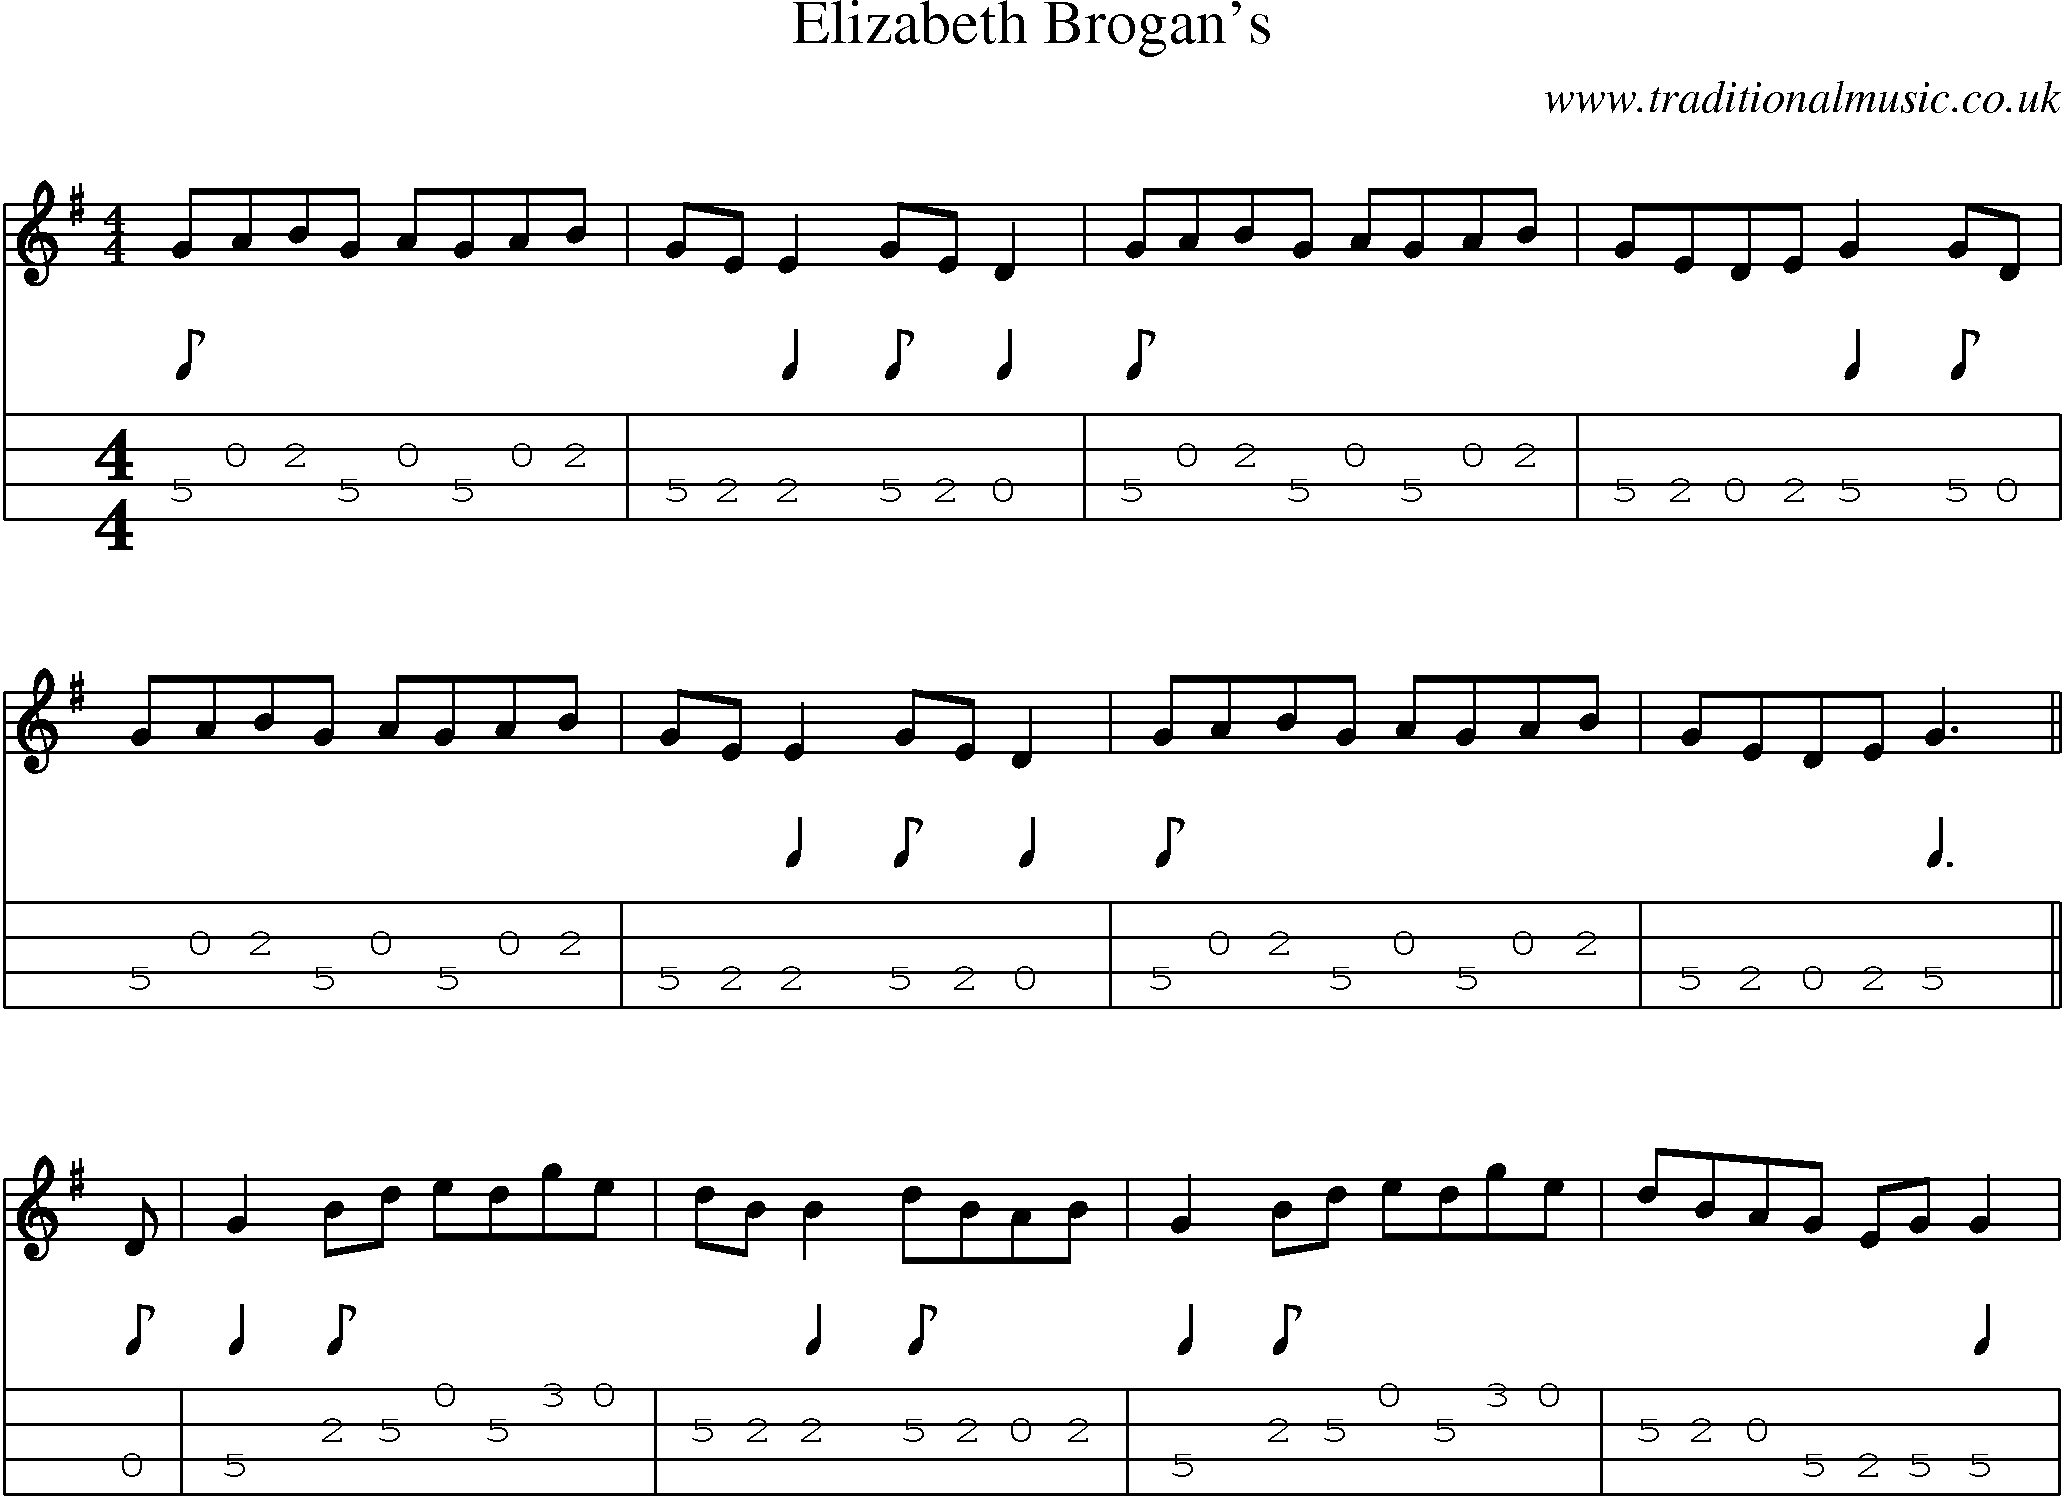 Music Score and Mandolin Tabs for Elizabeth Brogans